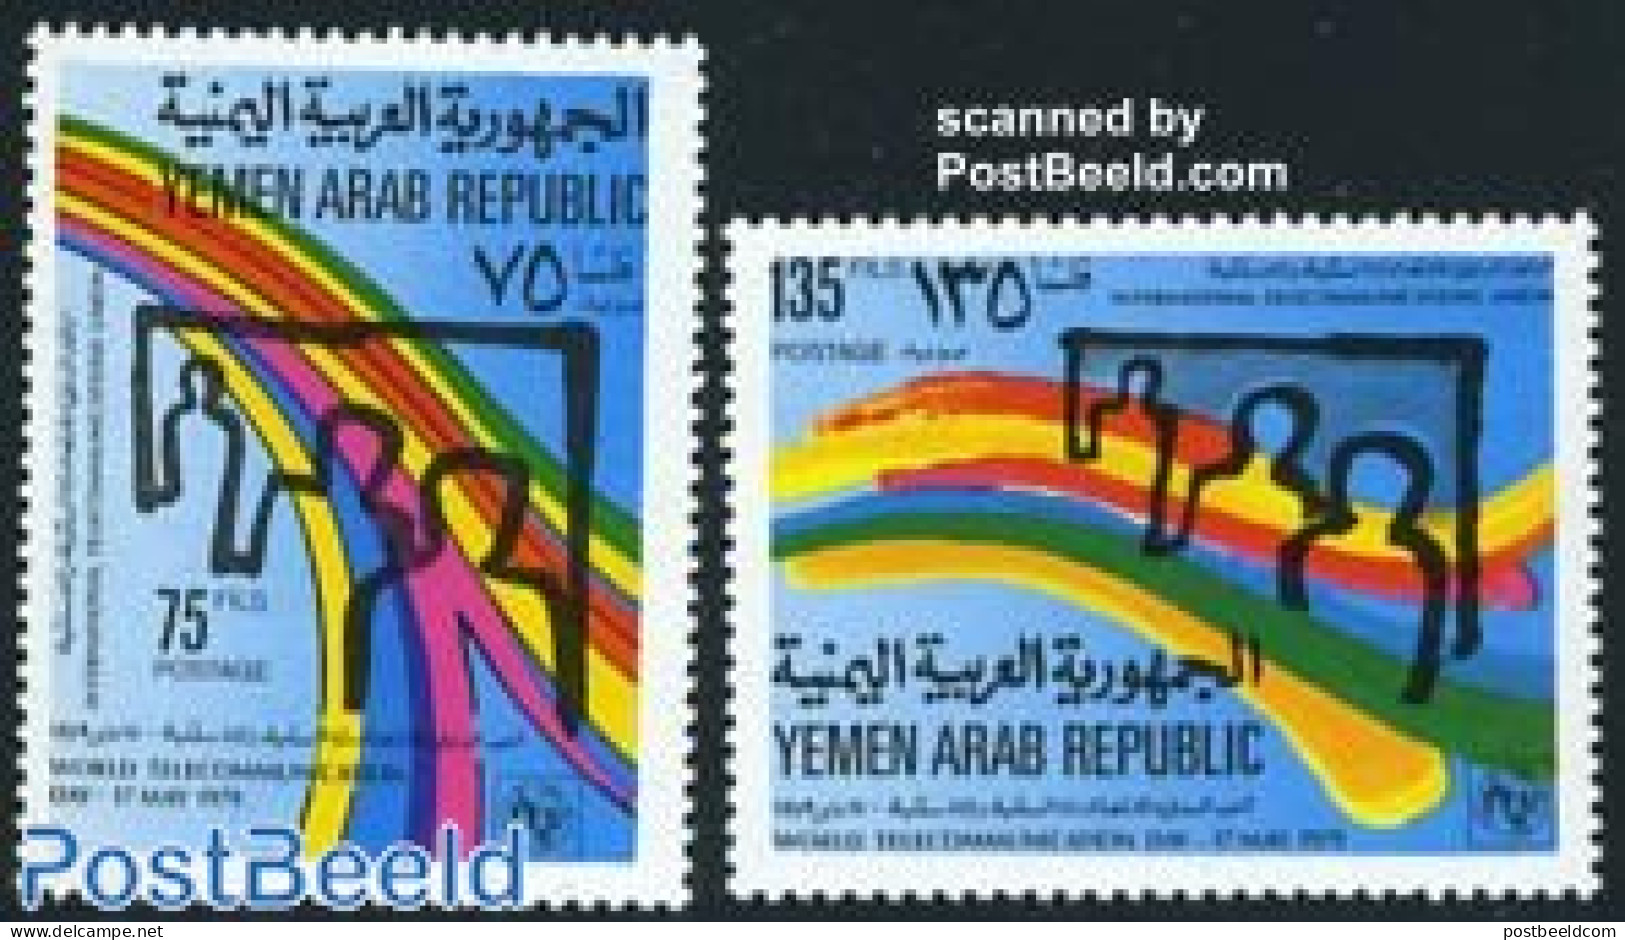 Yemen, Arab Republic 1980 World Telecom Day 2v, Mint NH, Science - Telecommunication - Telekom